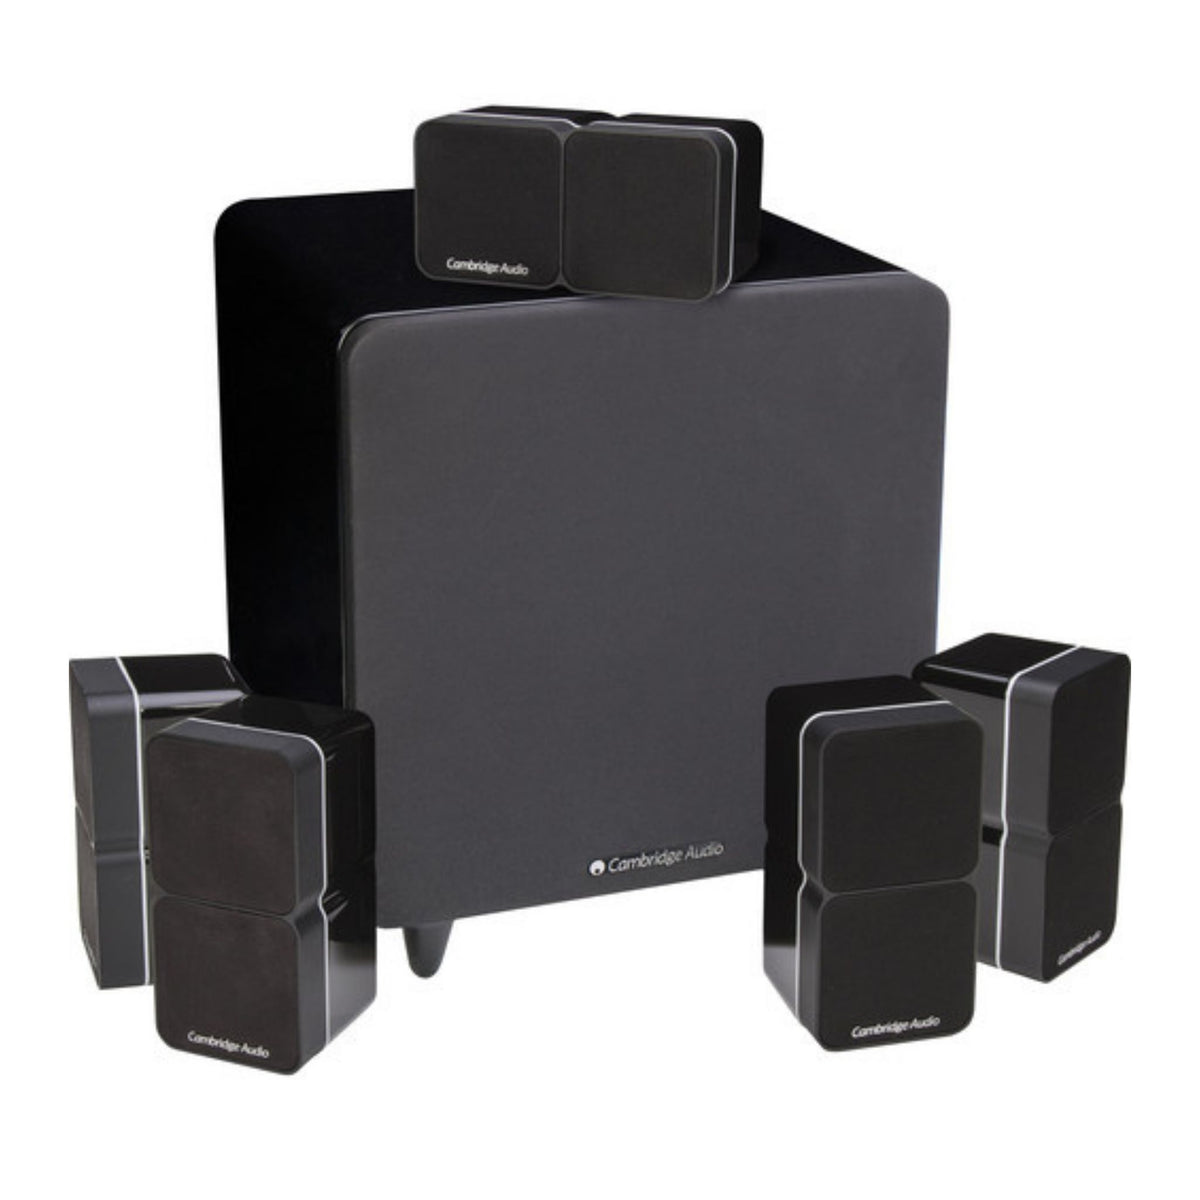 Cambridge Audio Minx 5.1 - Min 22 and X201 Sub - 5.1 Speaker System - Black - AVStore